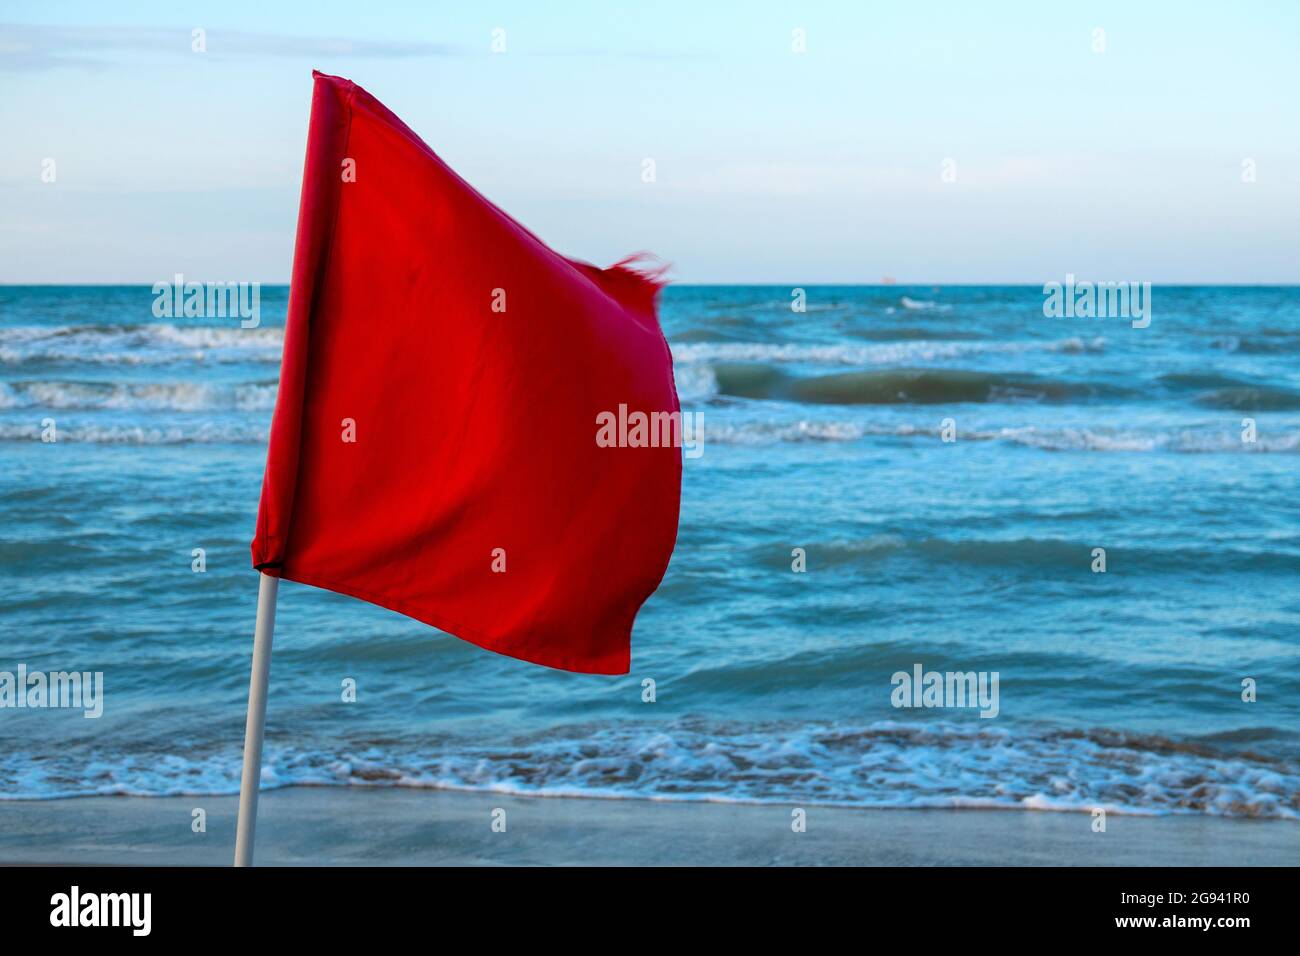 https://c8.alamy.com/compde/2g941r0/rote-warnflagge-am-strand-von-silvi-marina-italien-2g941r0.jpg